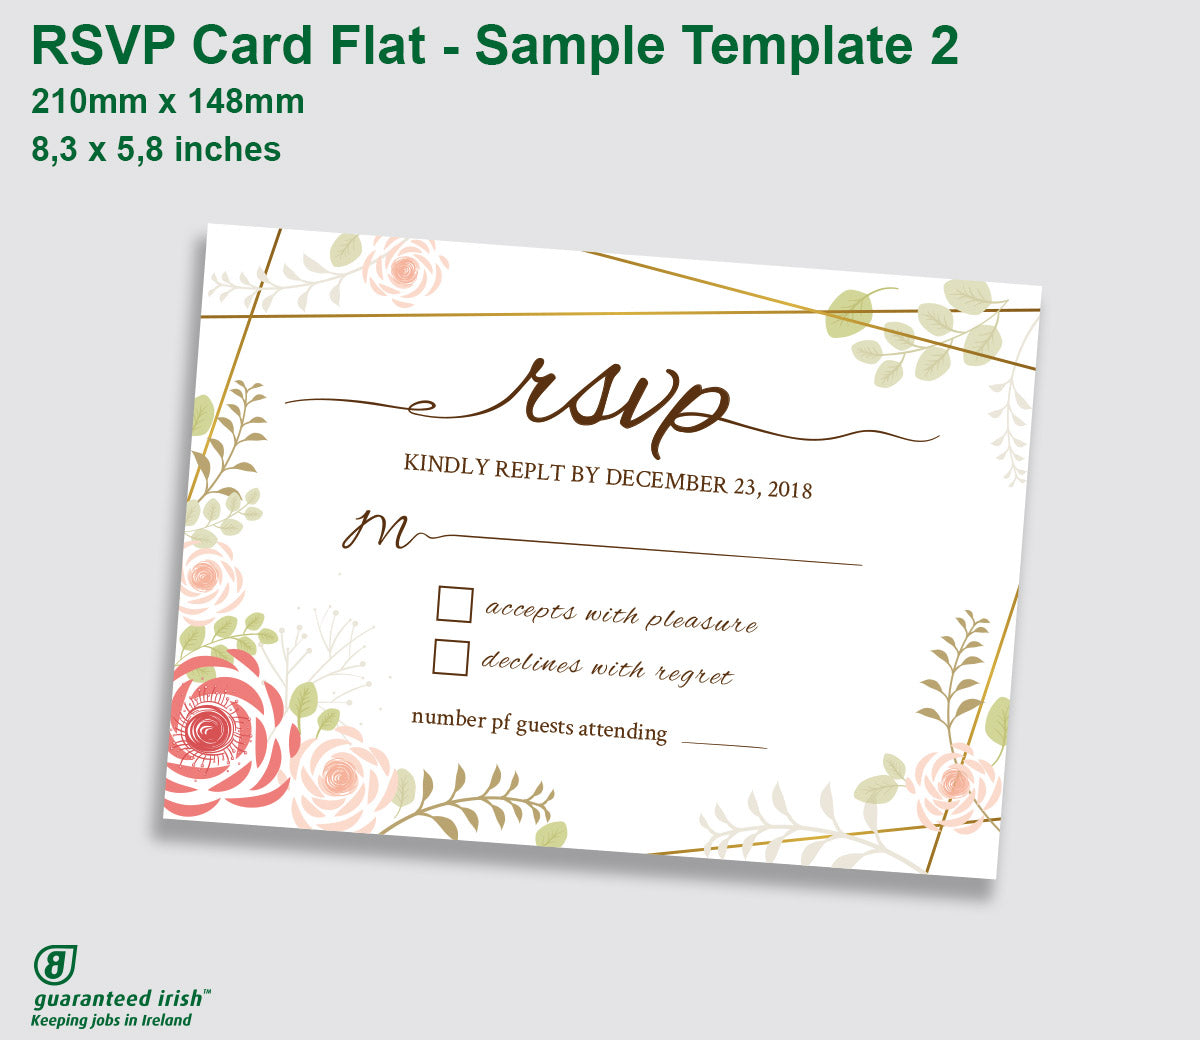 RSVP Card - Sample 2